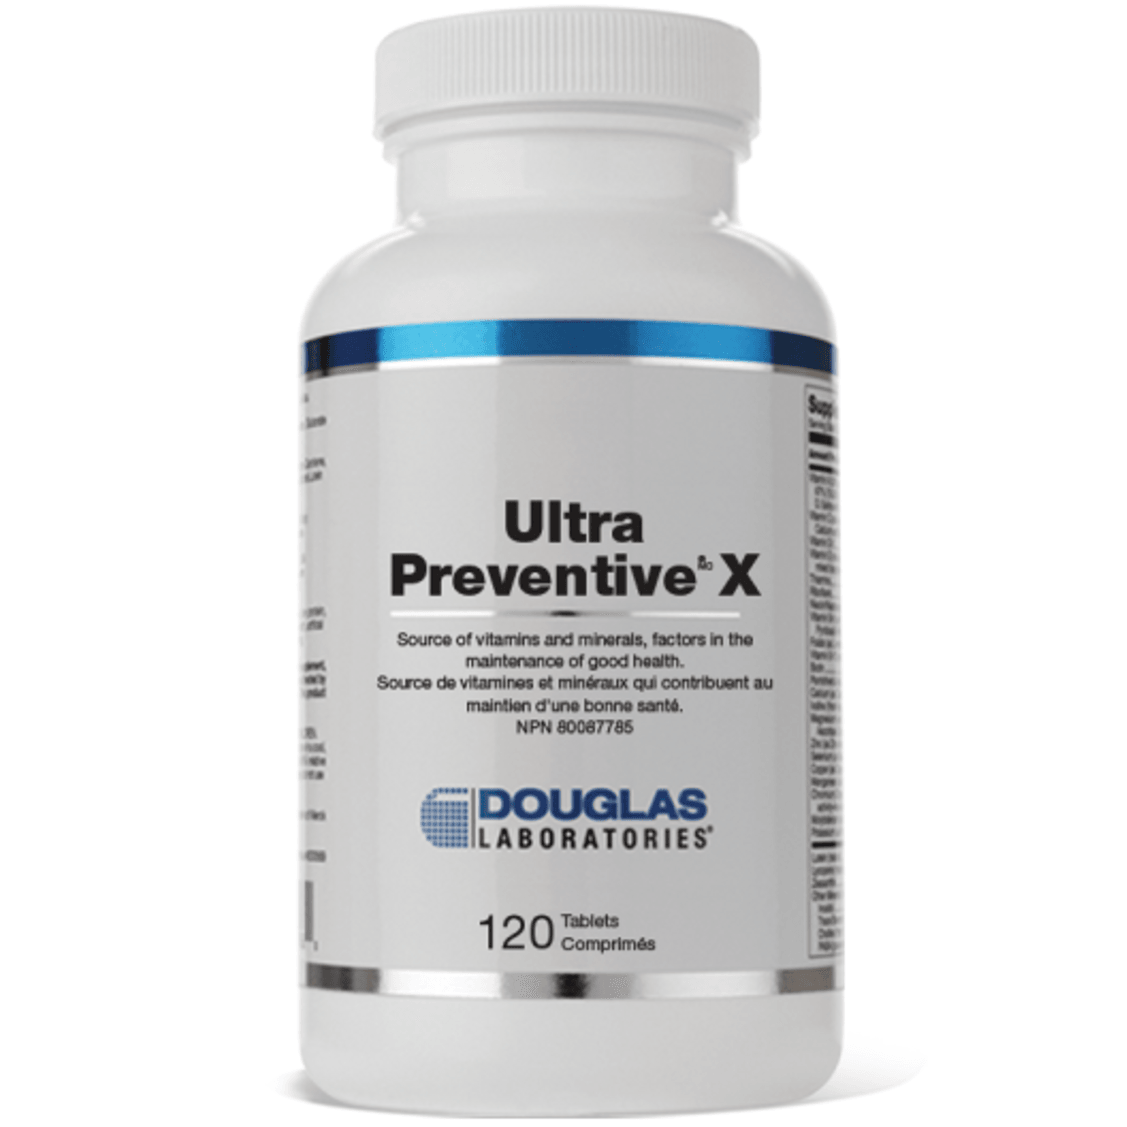 Douglas Laboratories Ultra Preventive X - 120 Tabs Supplements at Village Vitamin Store